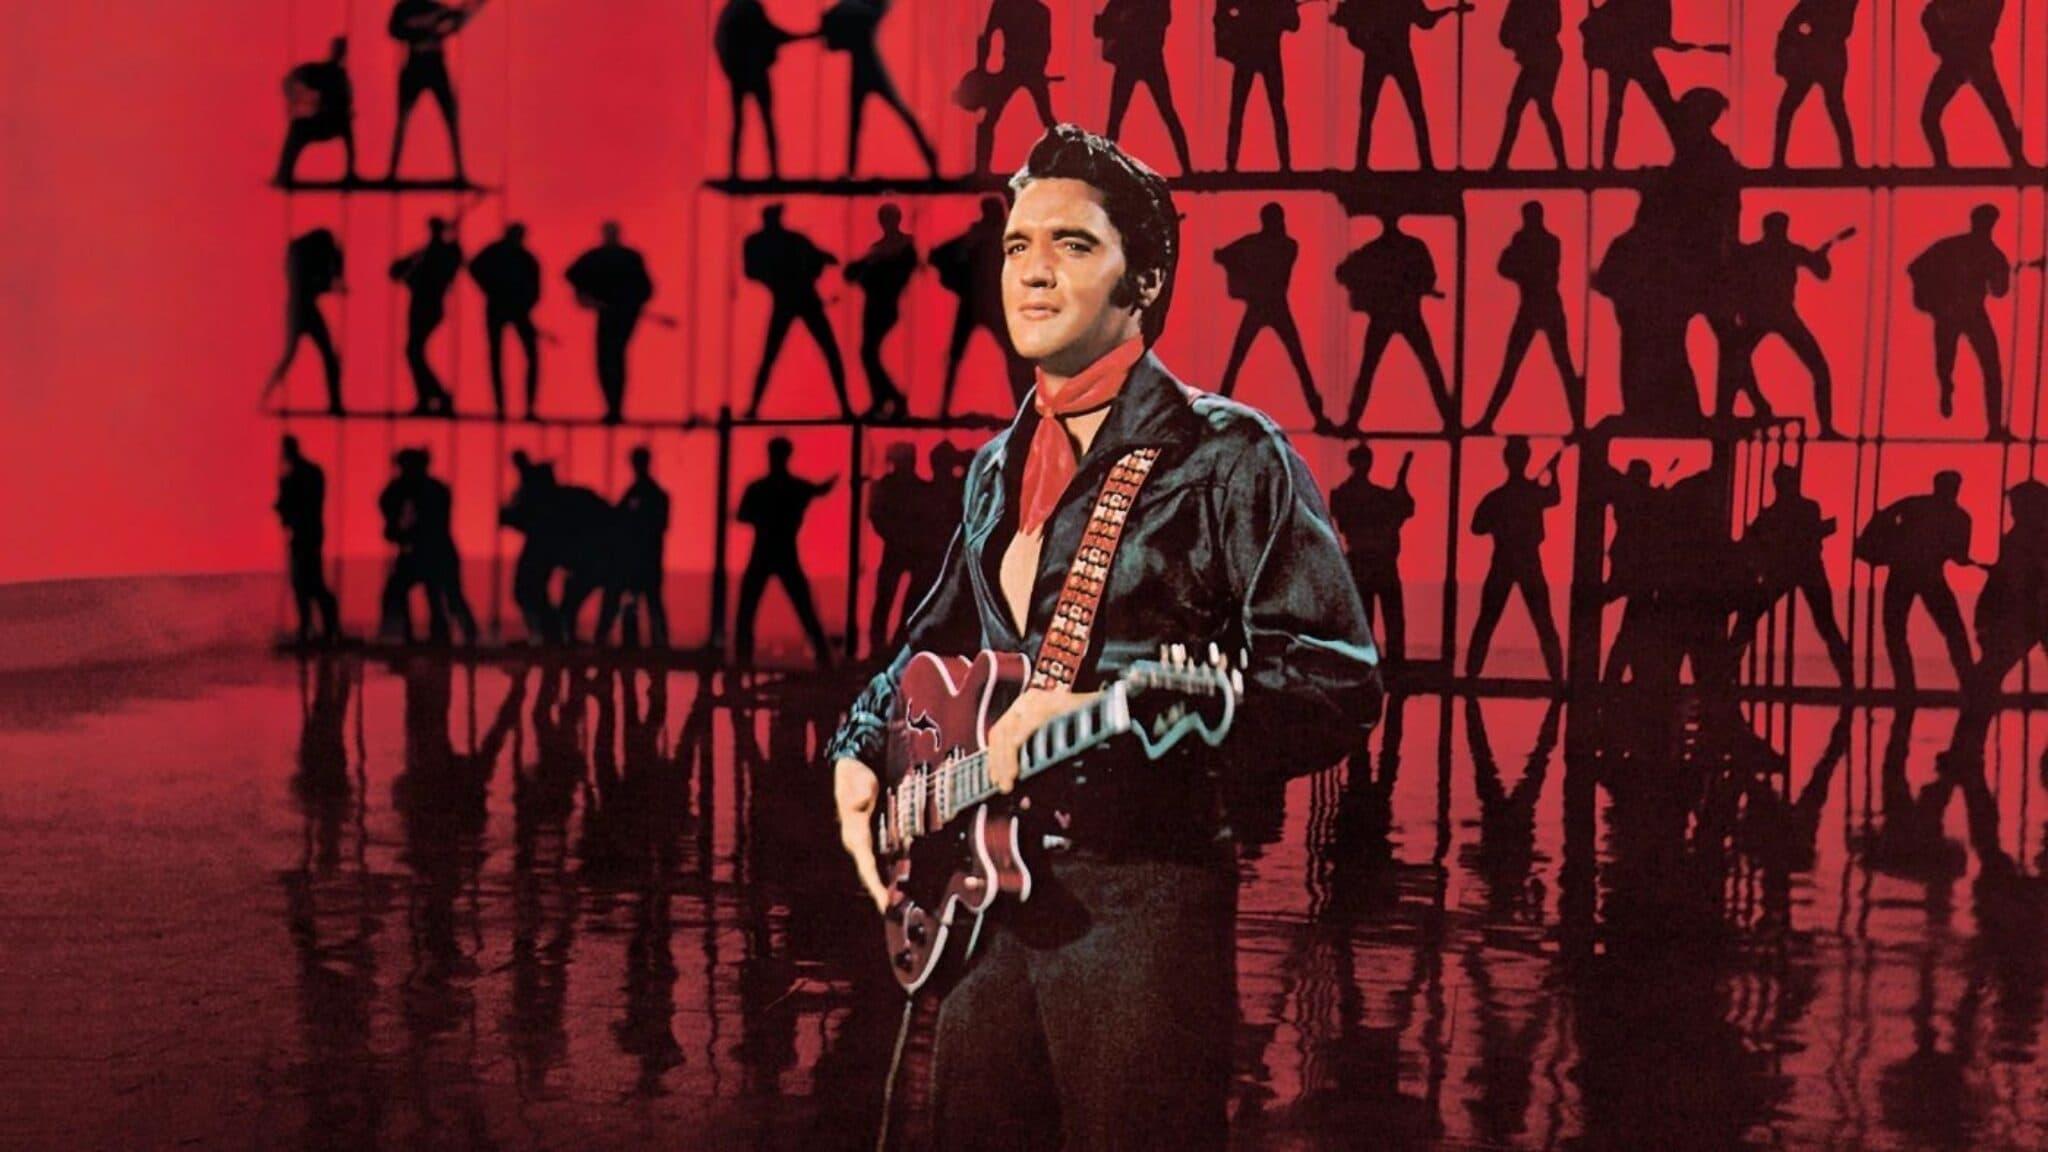 Reinventing Elvis: The 68' Comeback backdrop